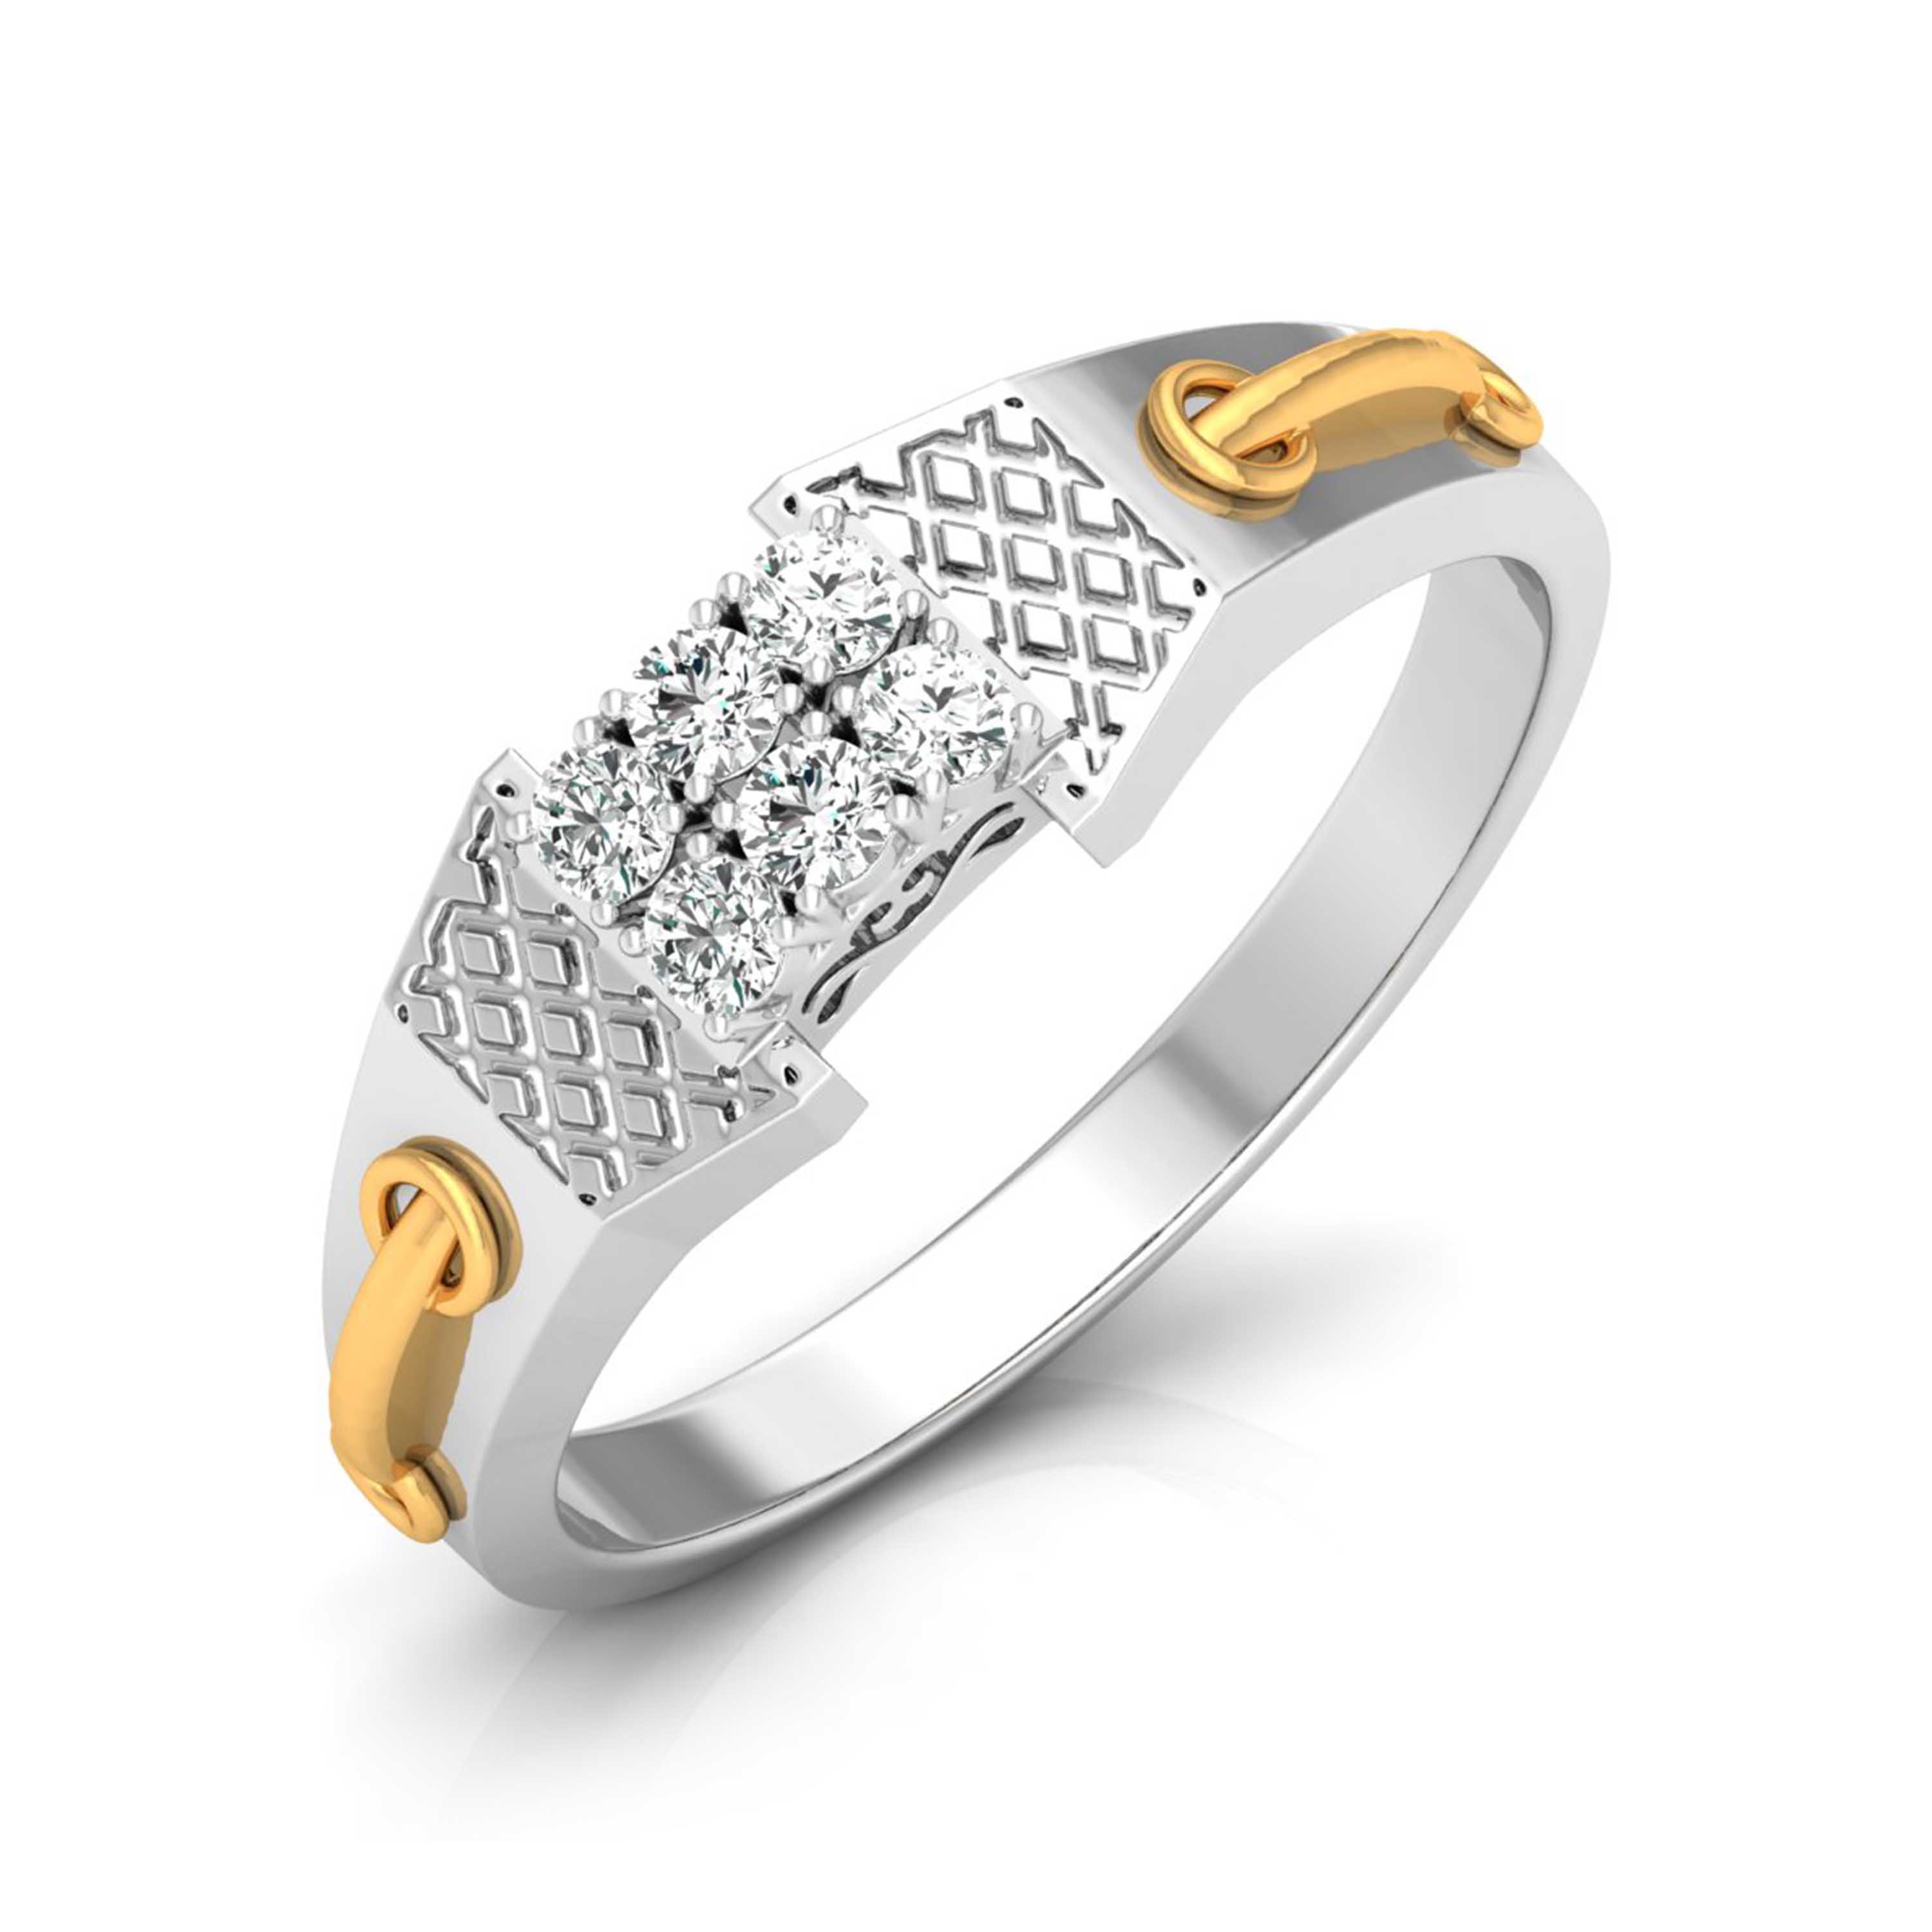 Buy Gold Rings For Women At Best Price | CaratLane